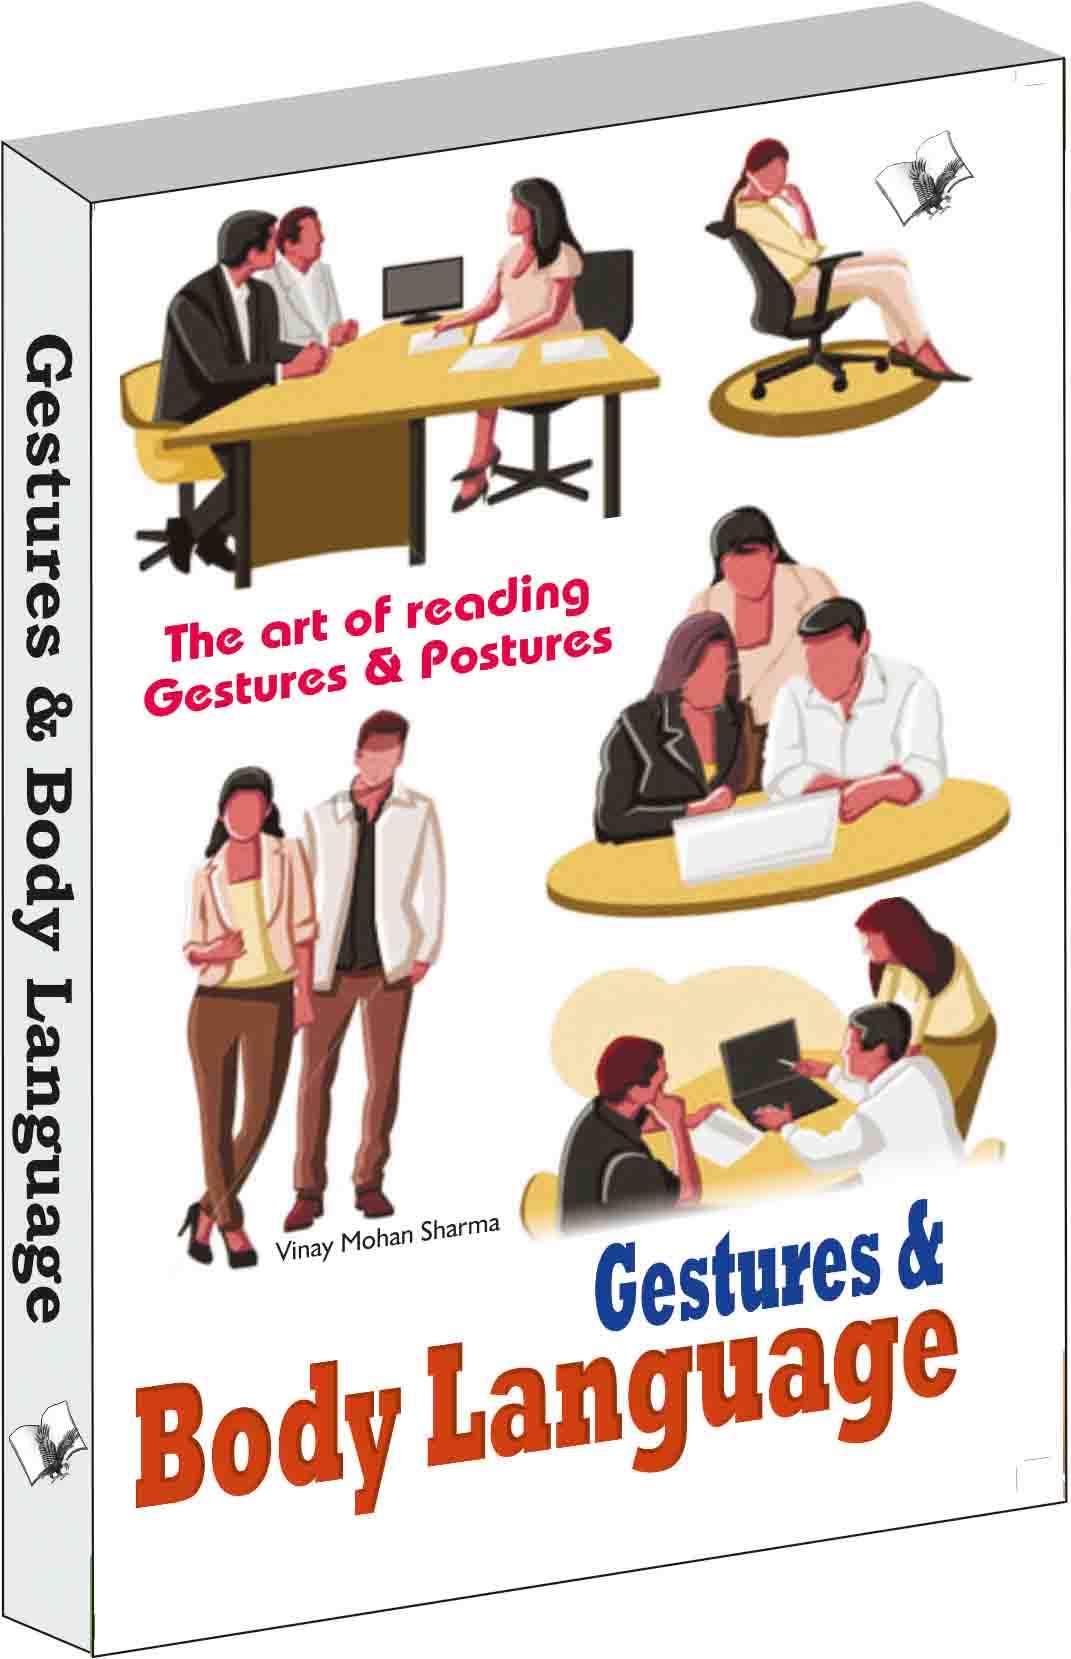 Gestures & Body Language-The Art of Reading Gestures & Postures